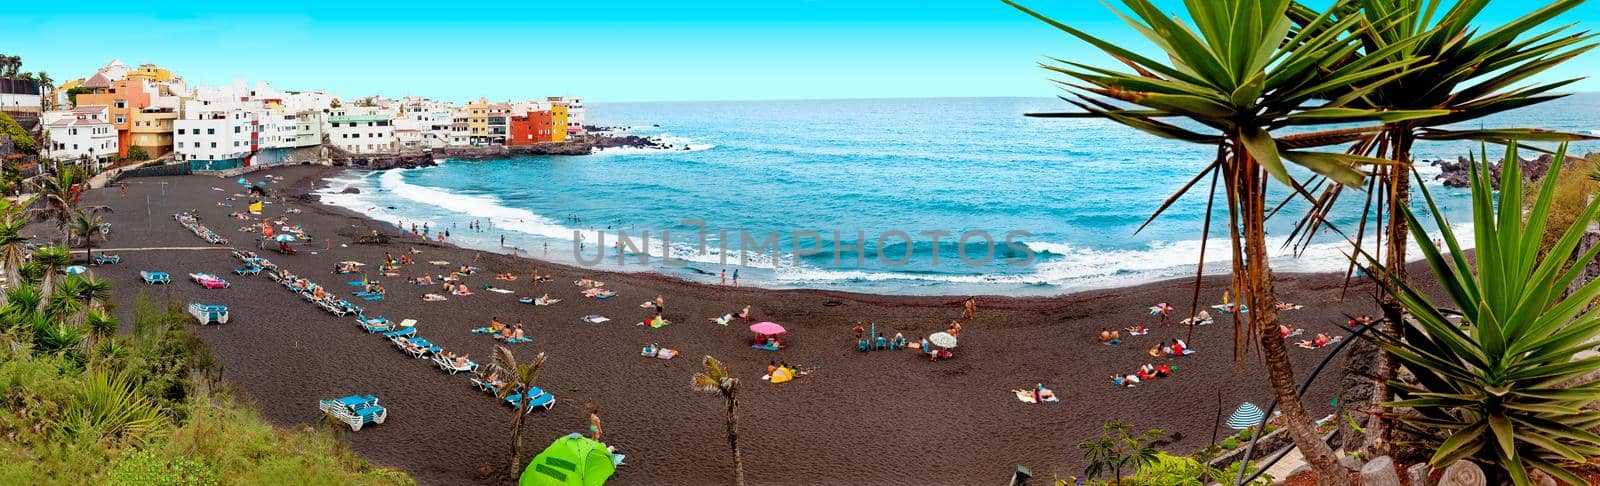 Nature scenic seascape in Canary Island.Travel adventures landscape